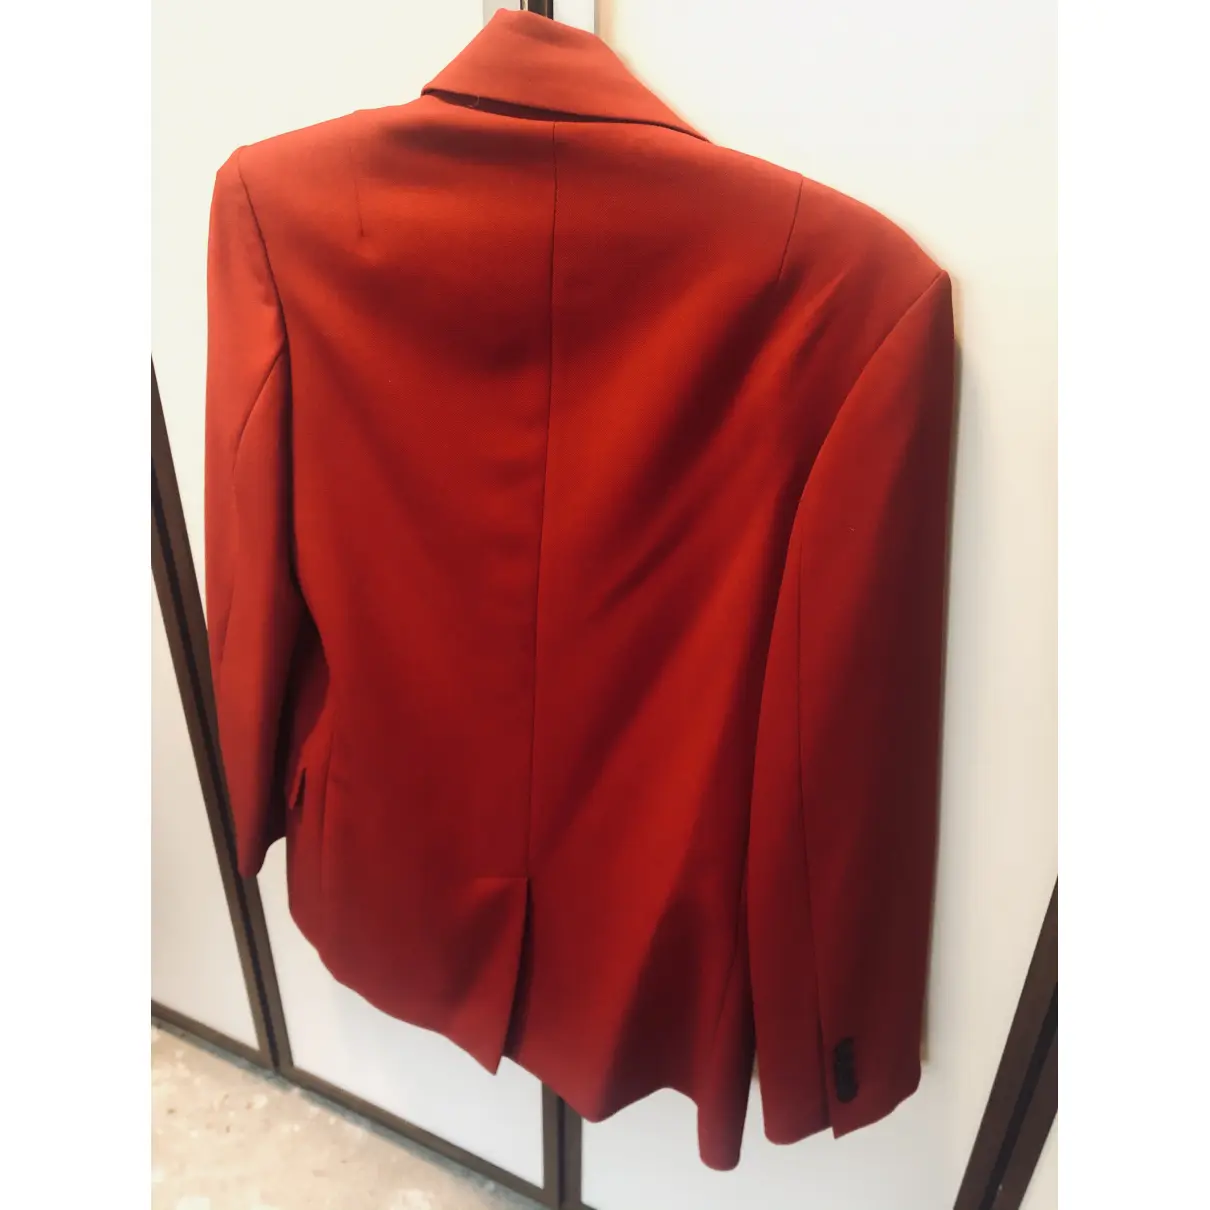 Buy Zara Red Cotton Jacket online